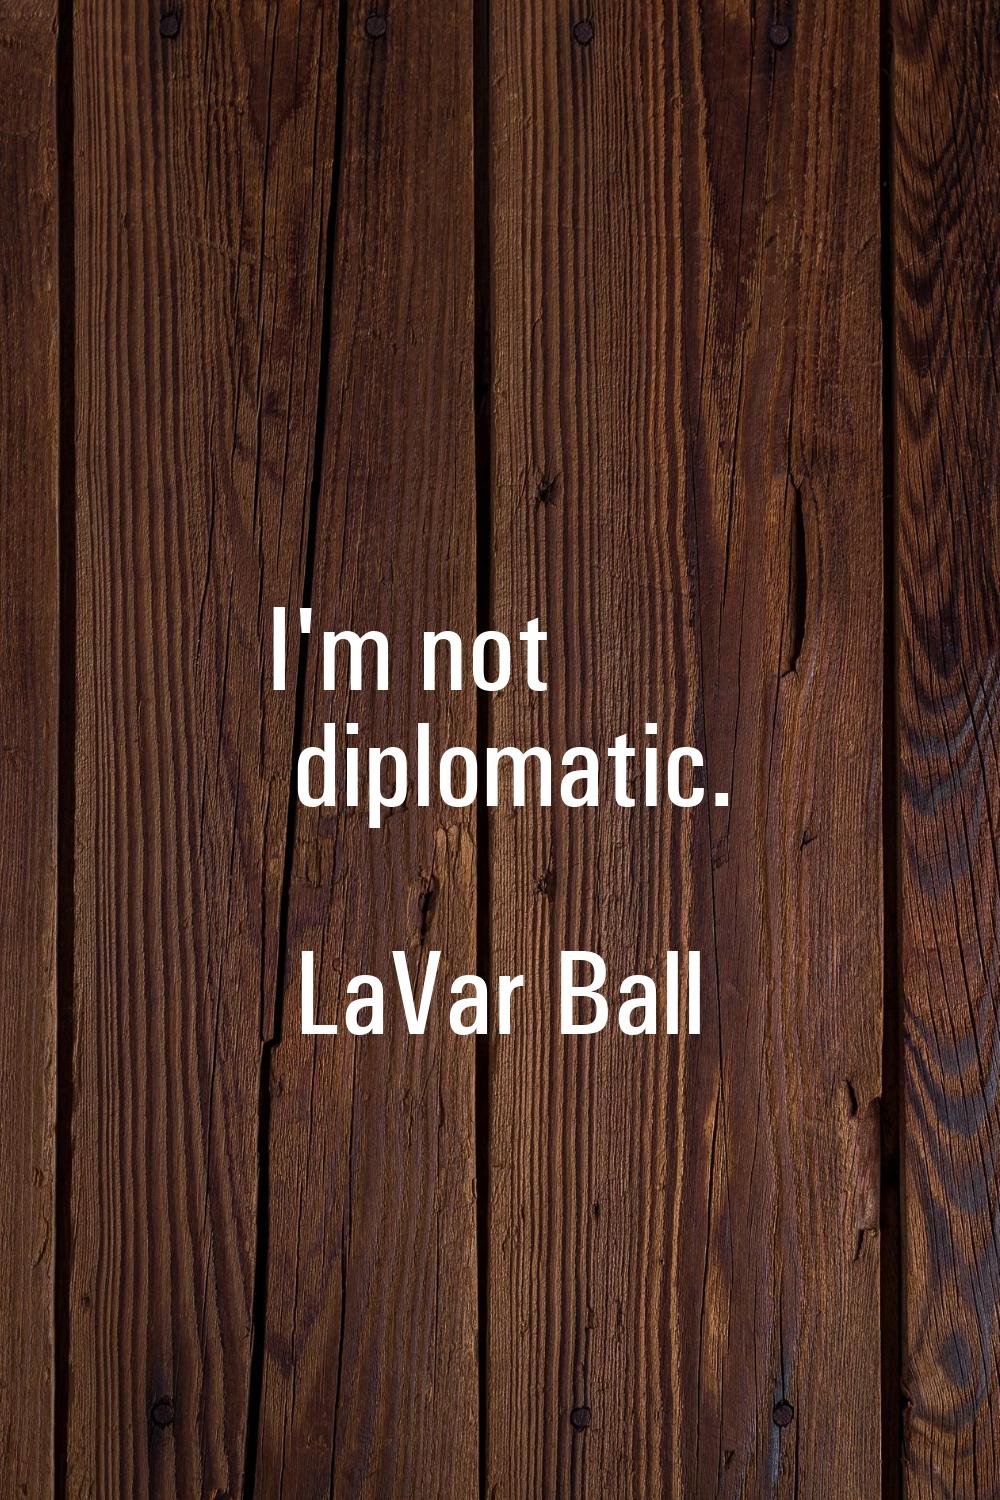 I'm not diplomatic.